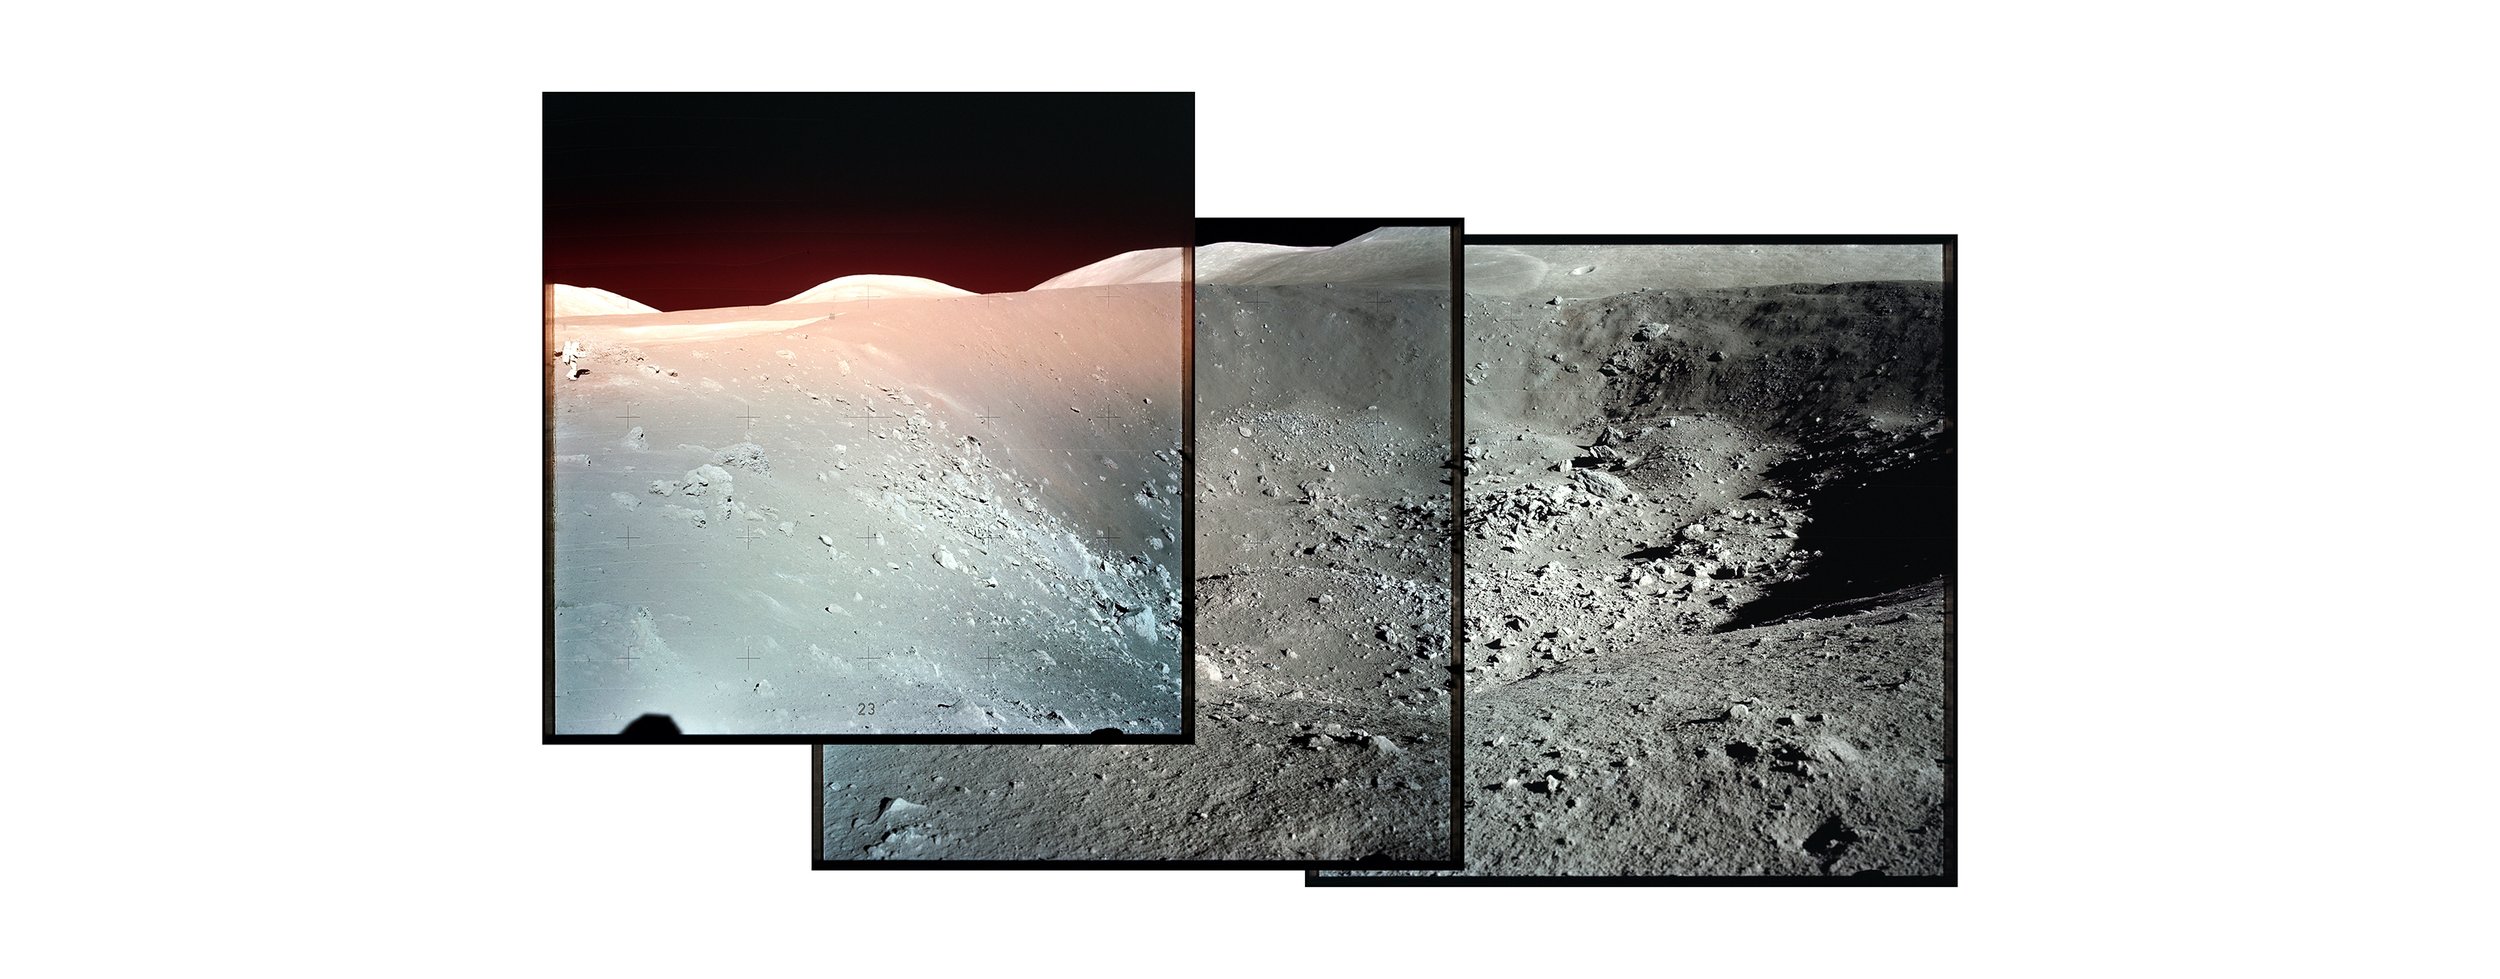  Taurus-Littrow Valley, Shorty crater (105x60)Apollo 17 Magazine 147/C - NASA photographs 1972 